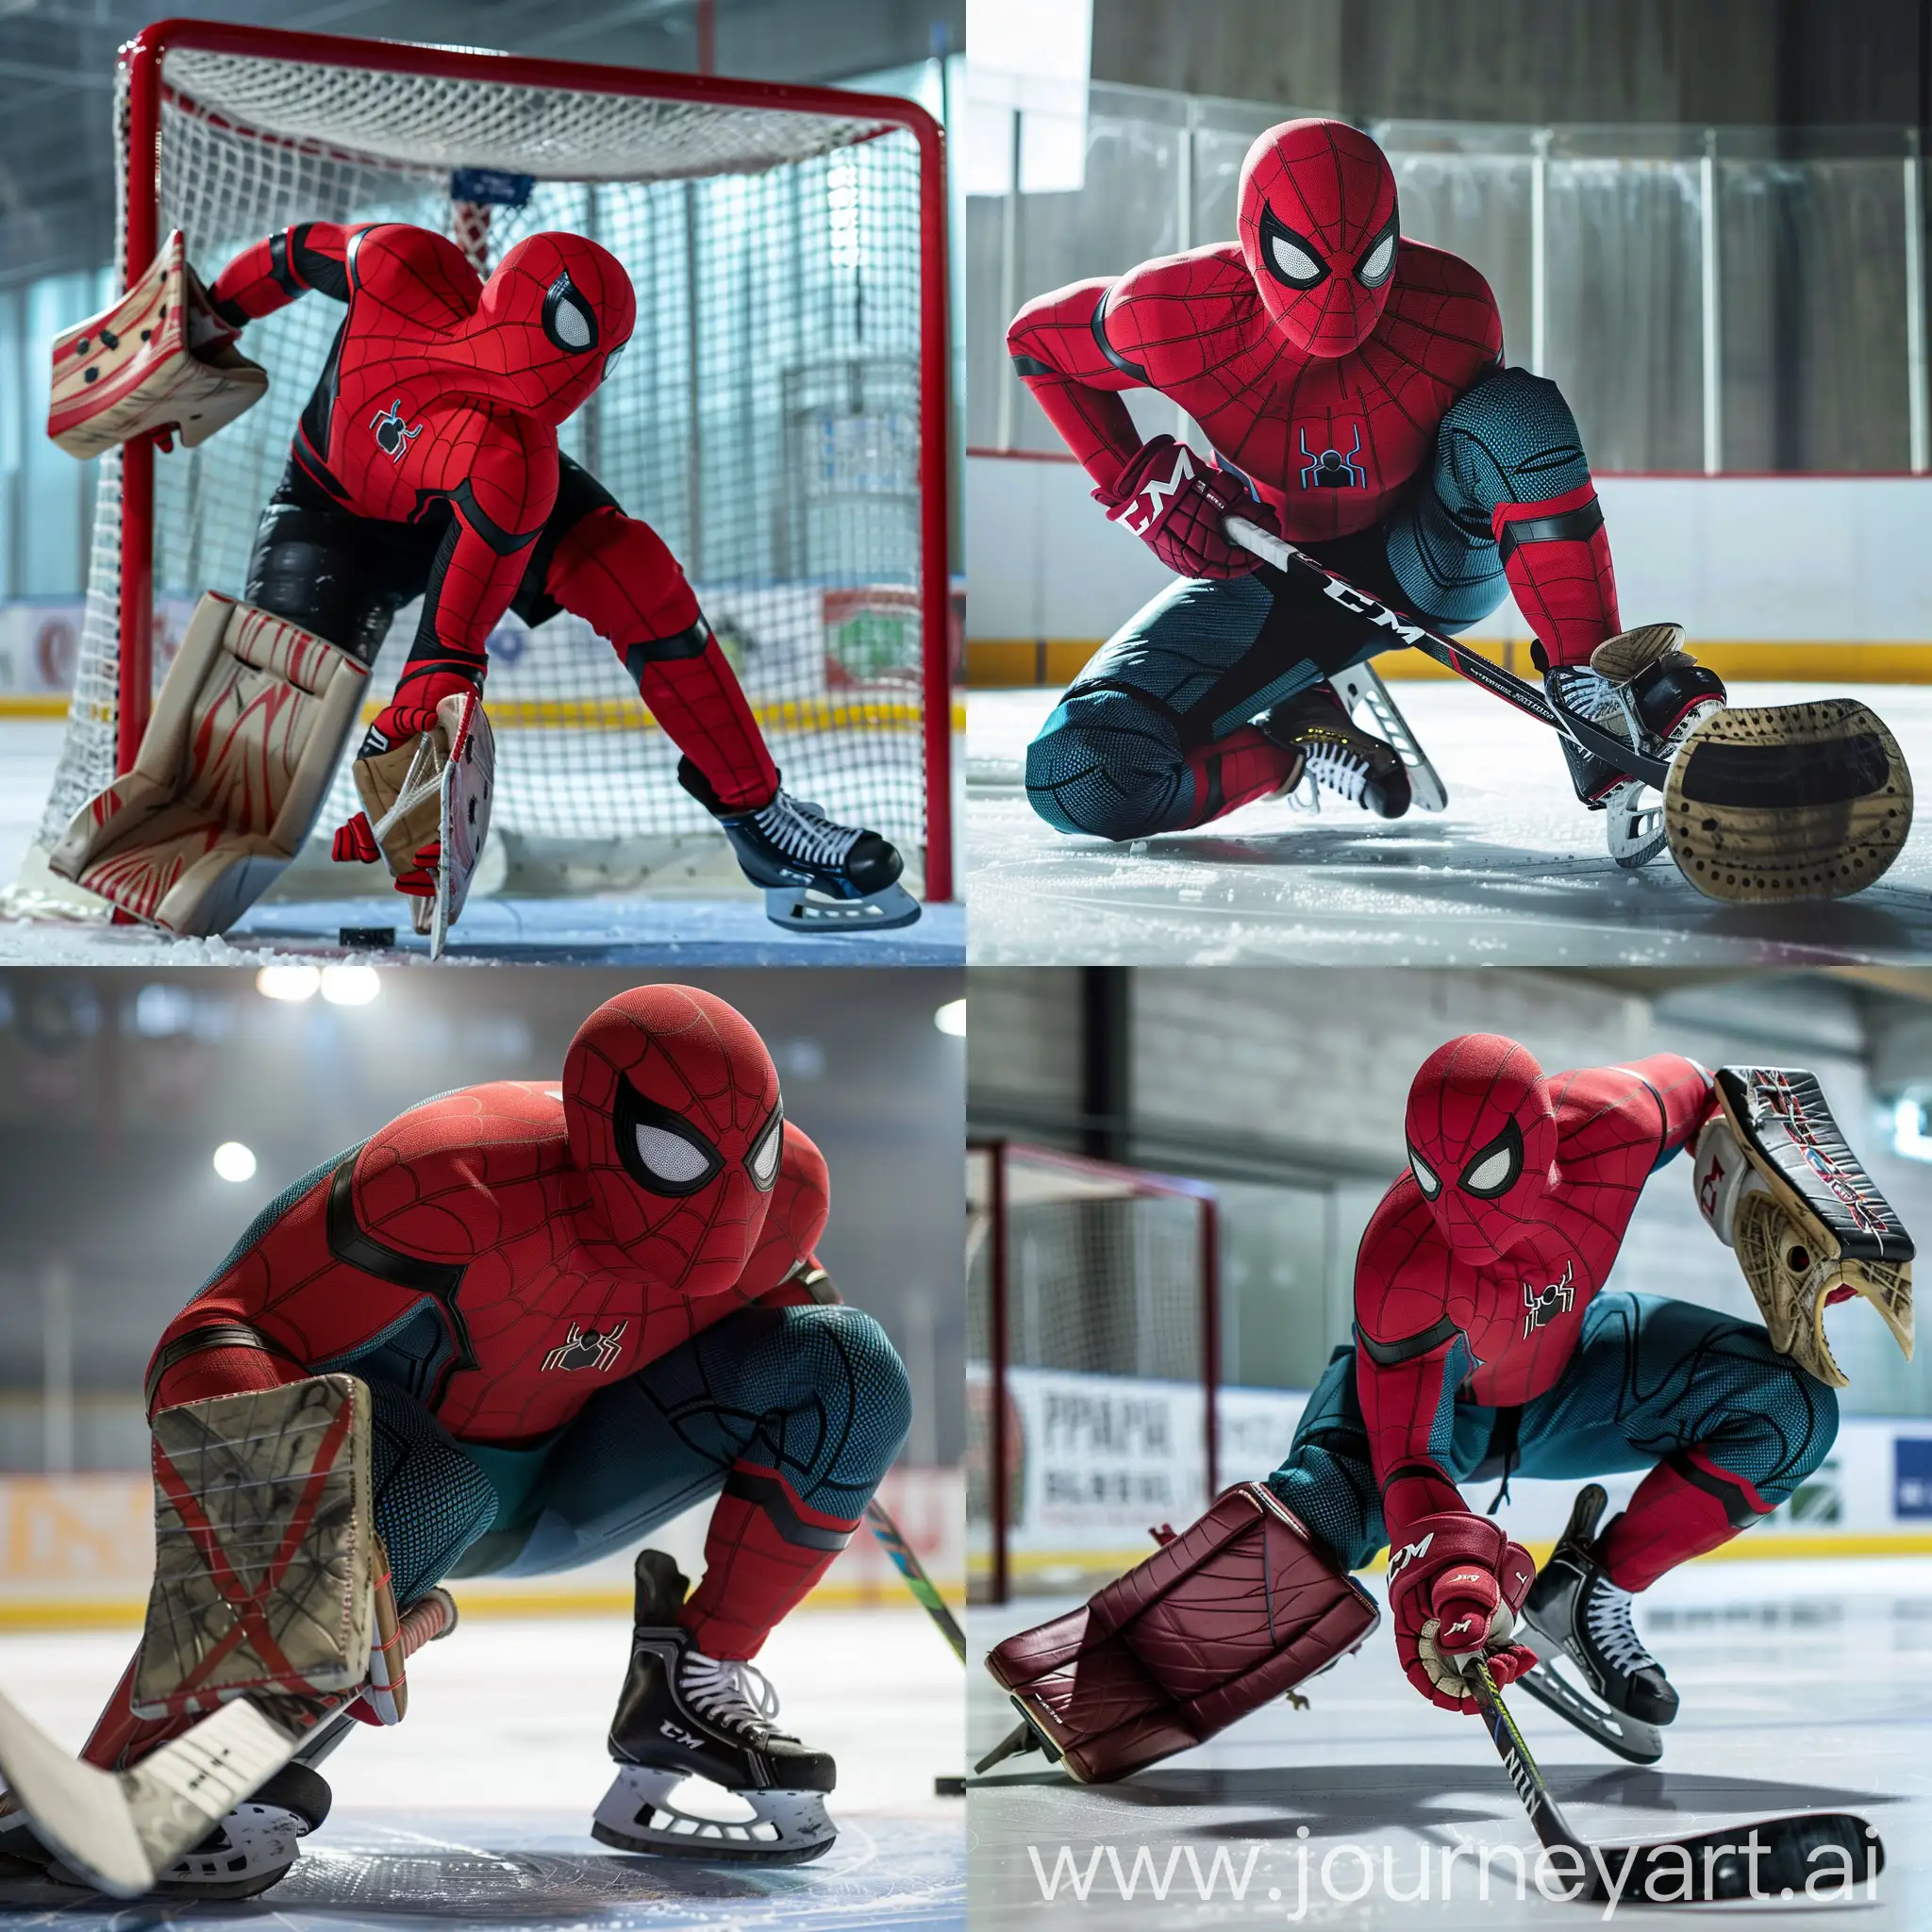 SpiderMan-Hockey-Action-in-Vibrant-11-Visuals